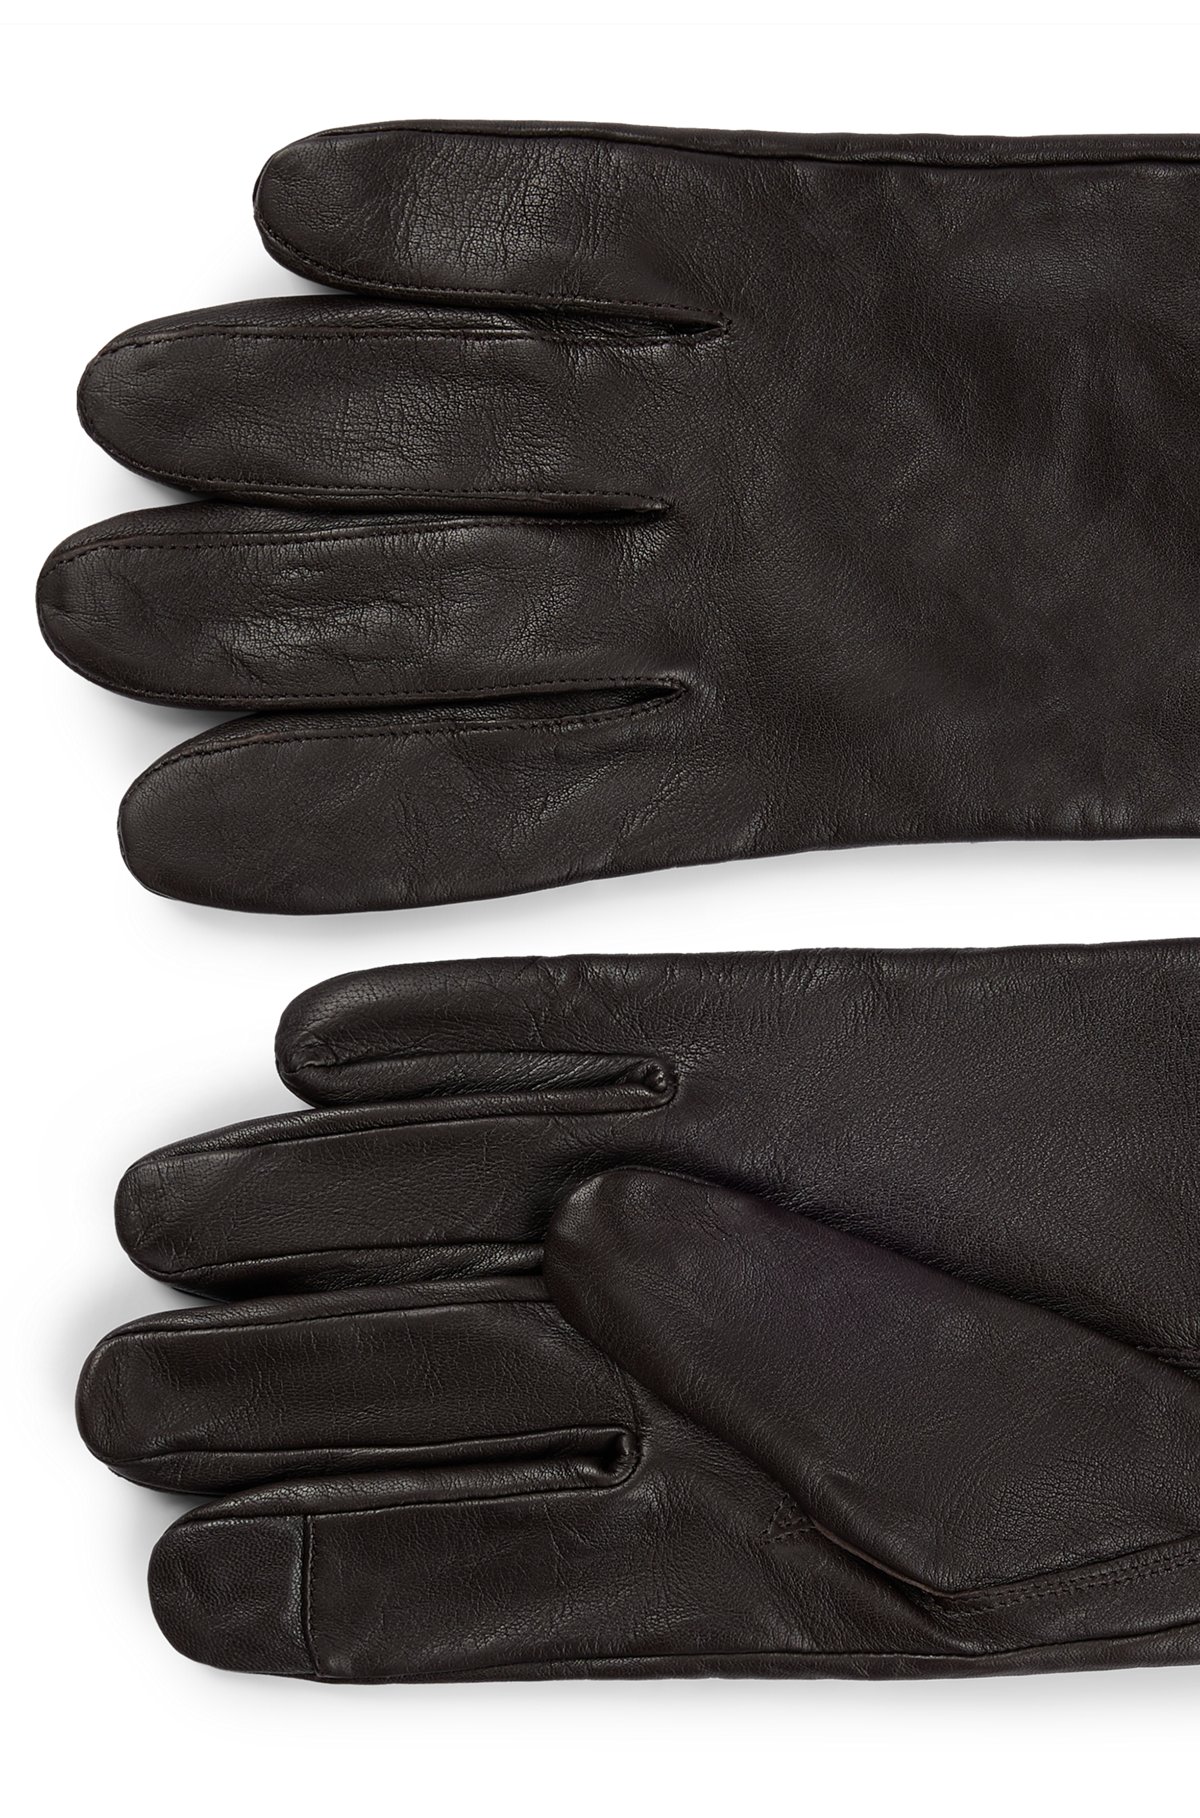 Læderhandsker med branding og touchscreen-venlige fingerspidser, Mørkebrun